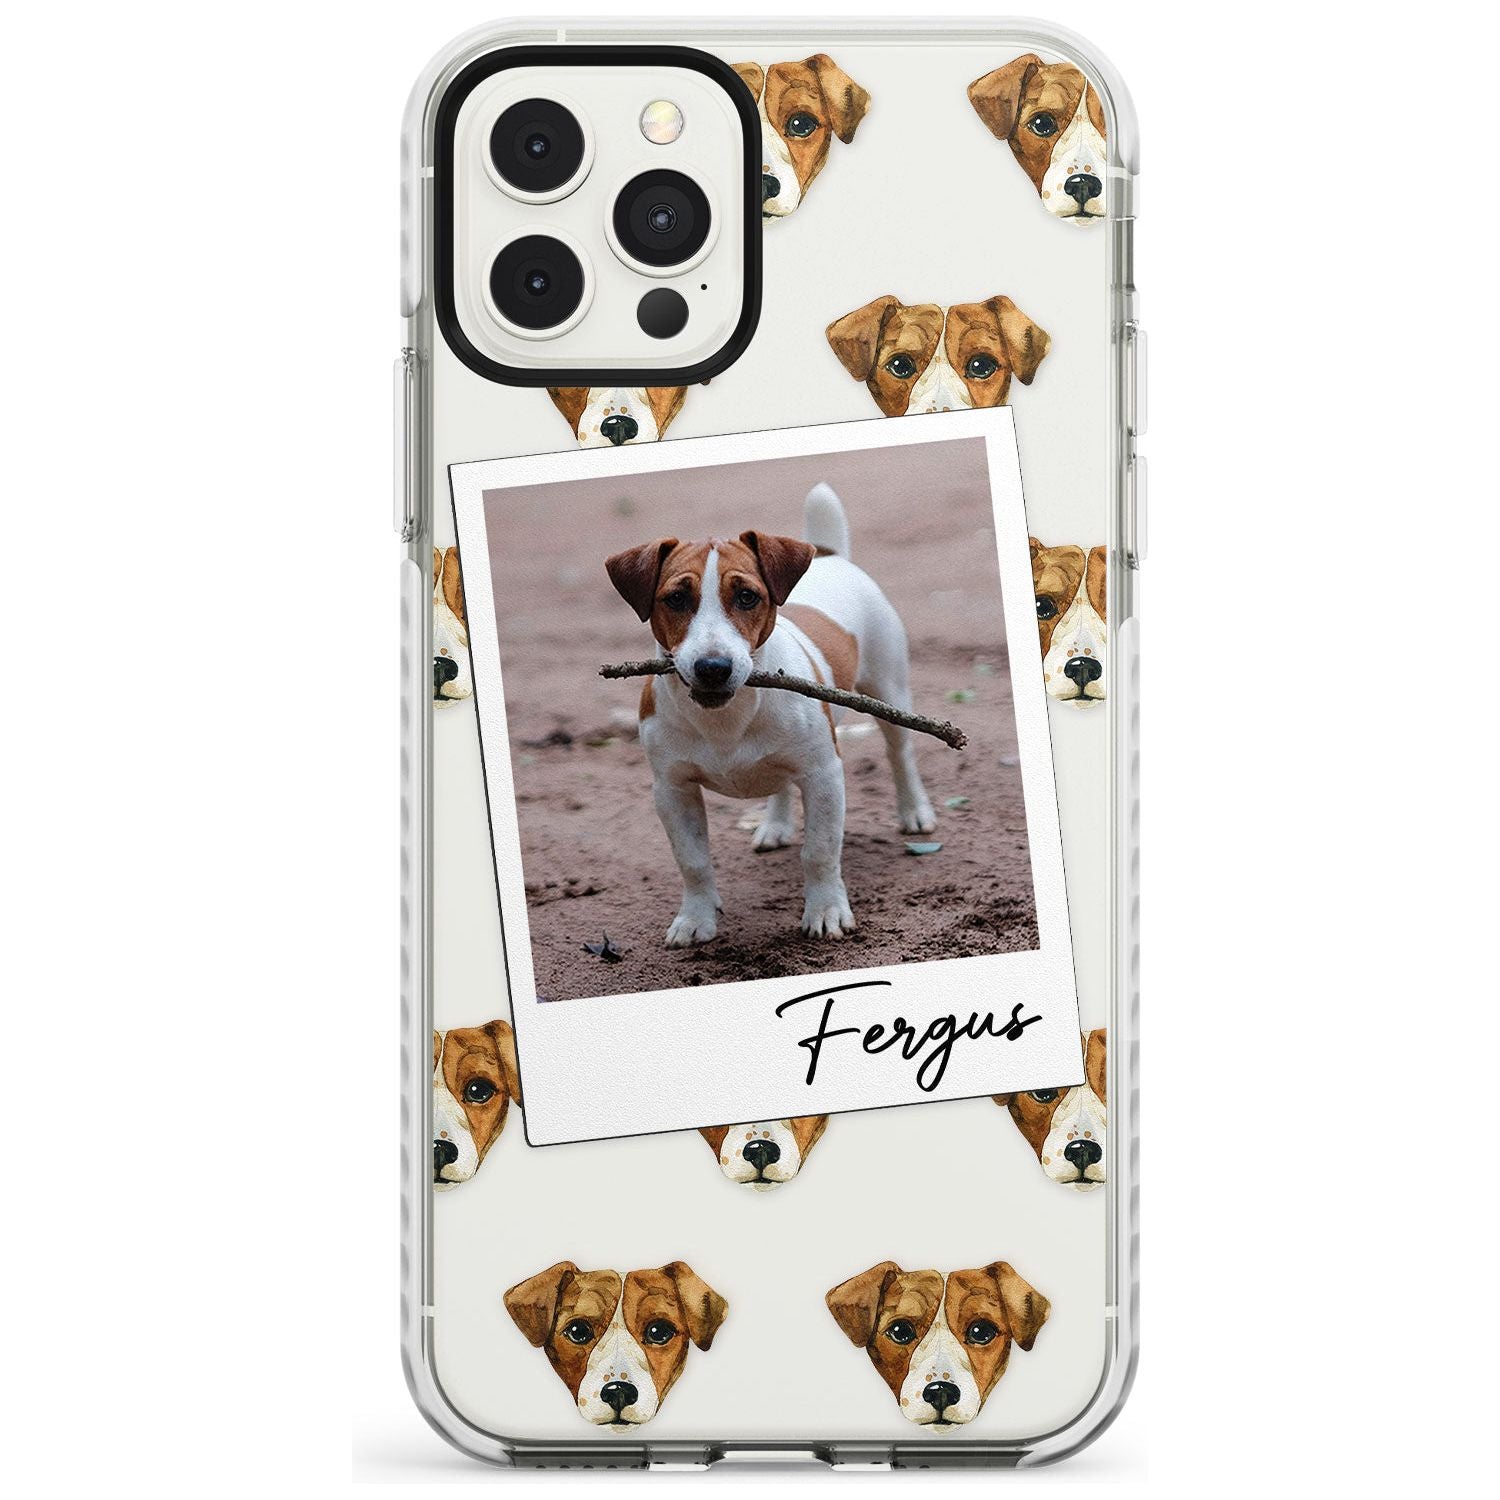 Jack Russell - Custom Dog Photo Slim TPU Phone Case for iPhone 11 Pro Max